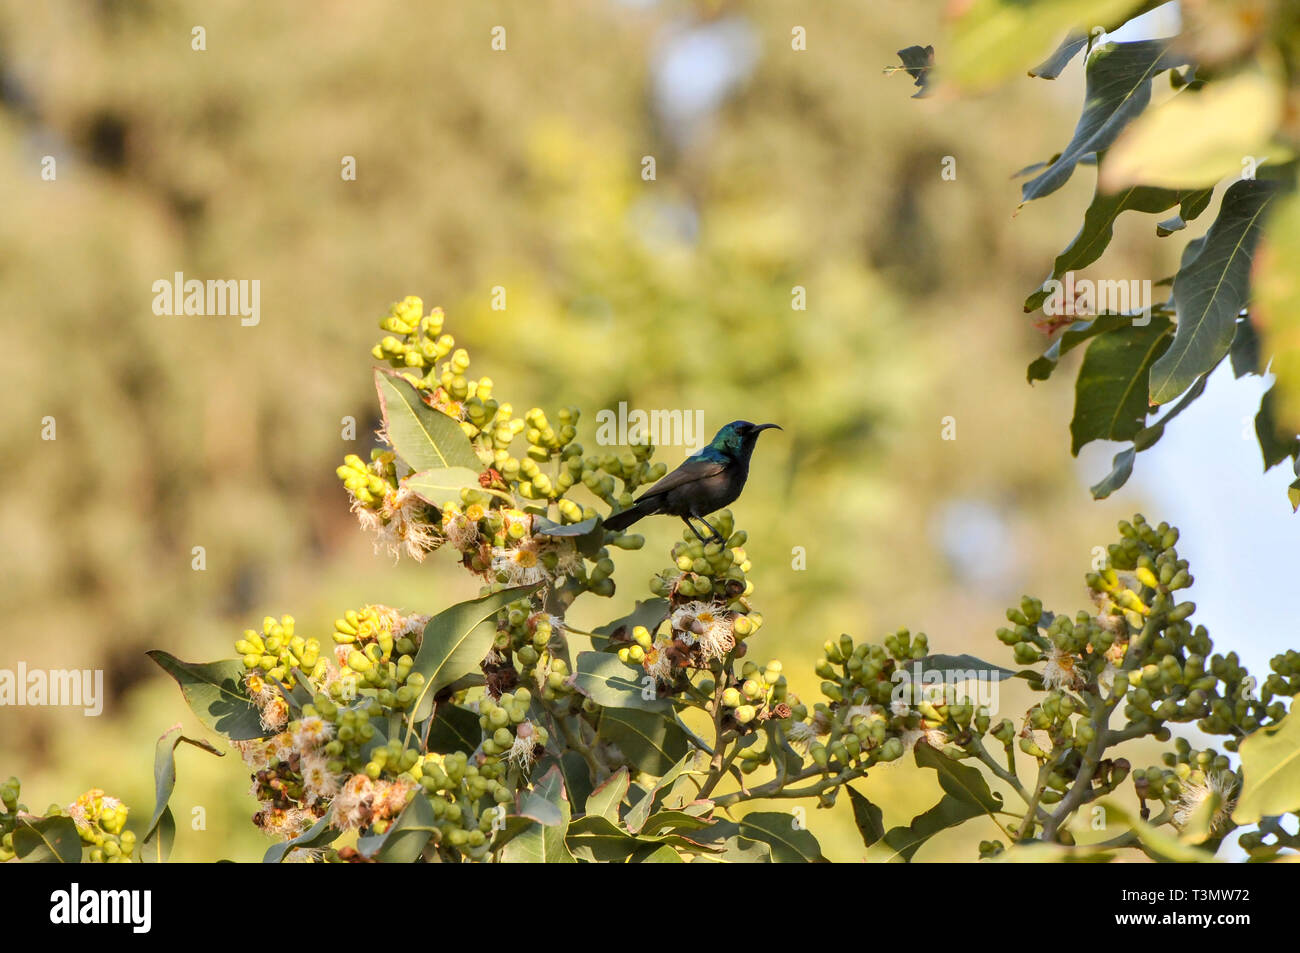 Palestine Sunbird or Northern Orange-tufted Sunbird (Cinnyris oseus) is a small passerine bird of the sunbird family which is found in parts of the Mi Stock Photo